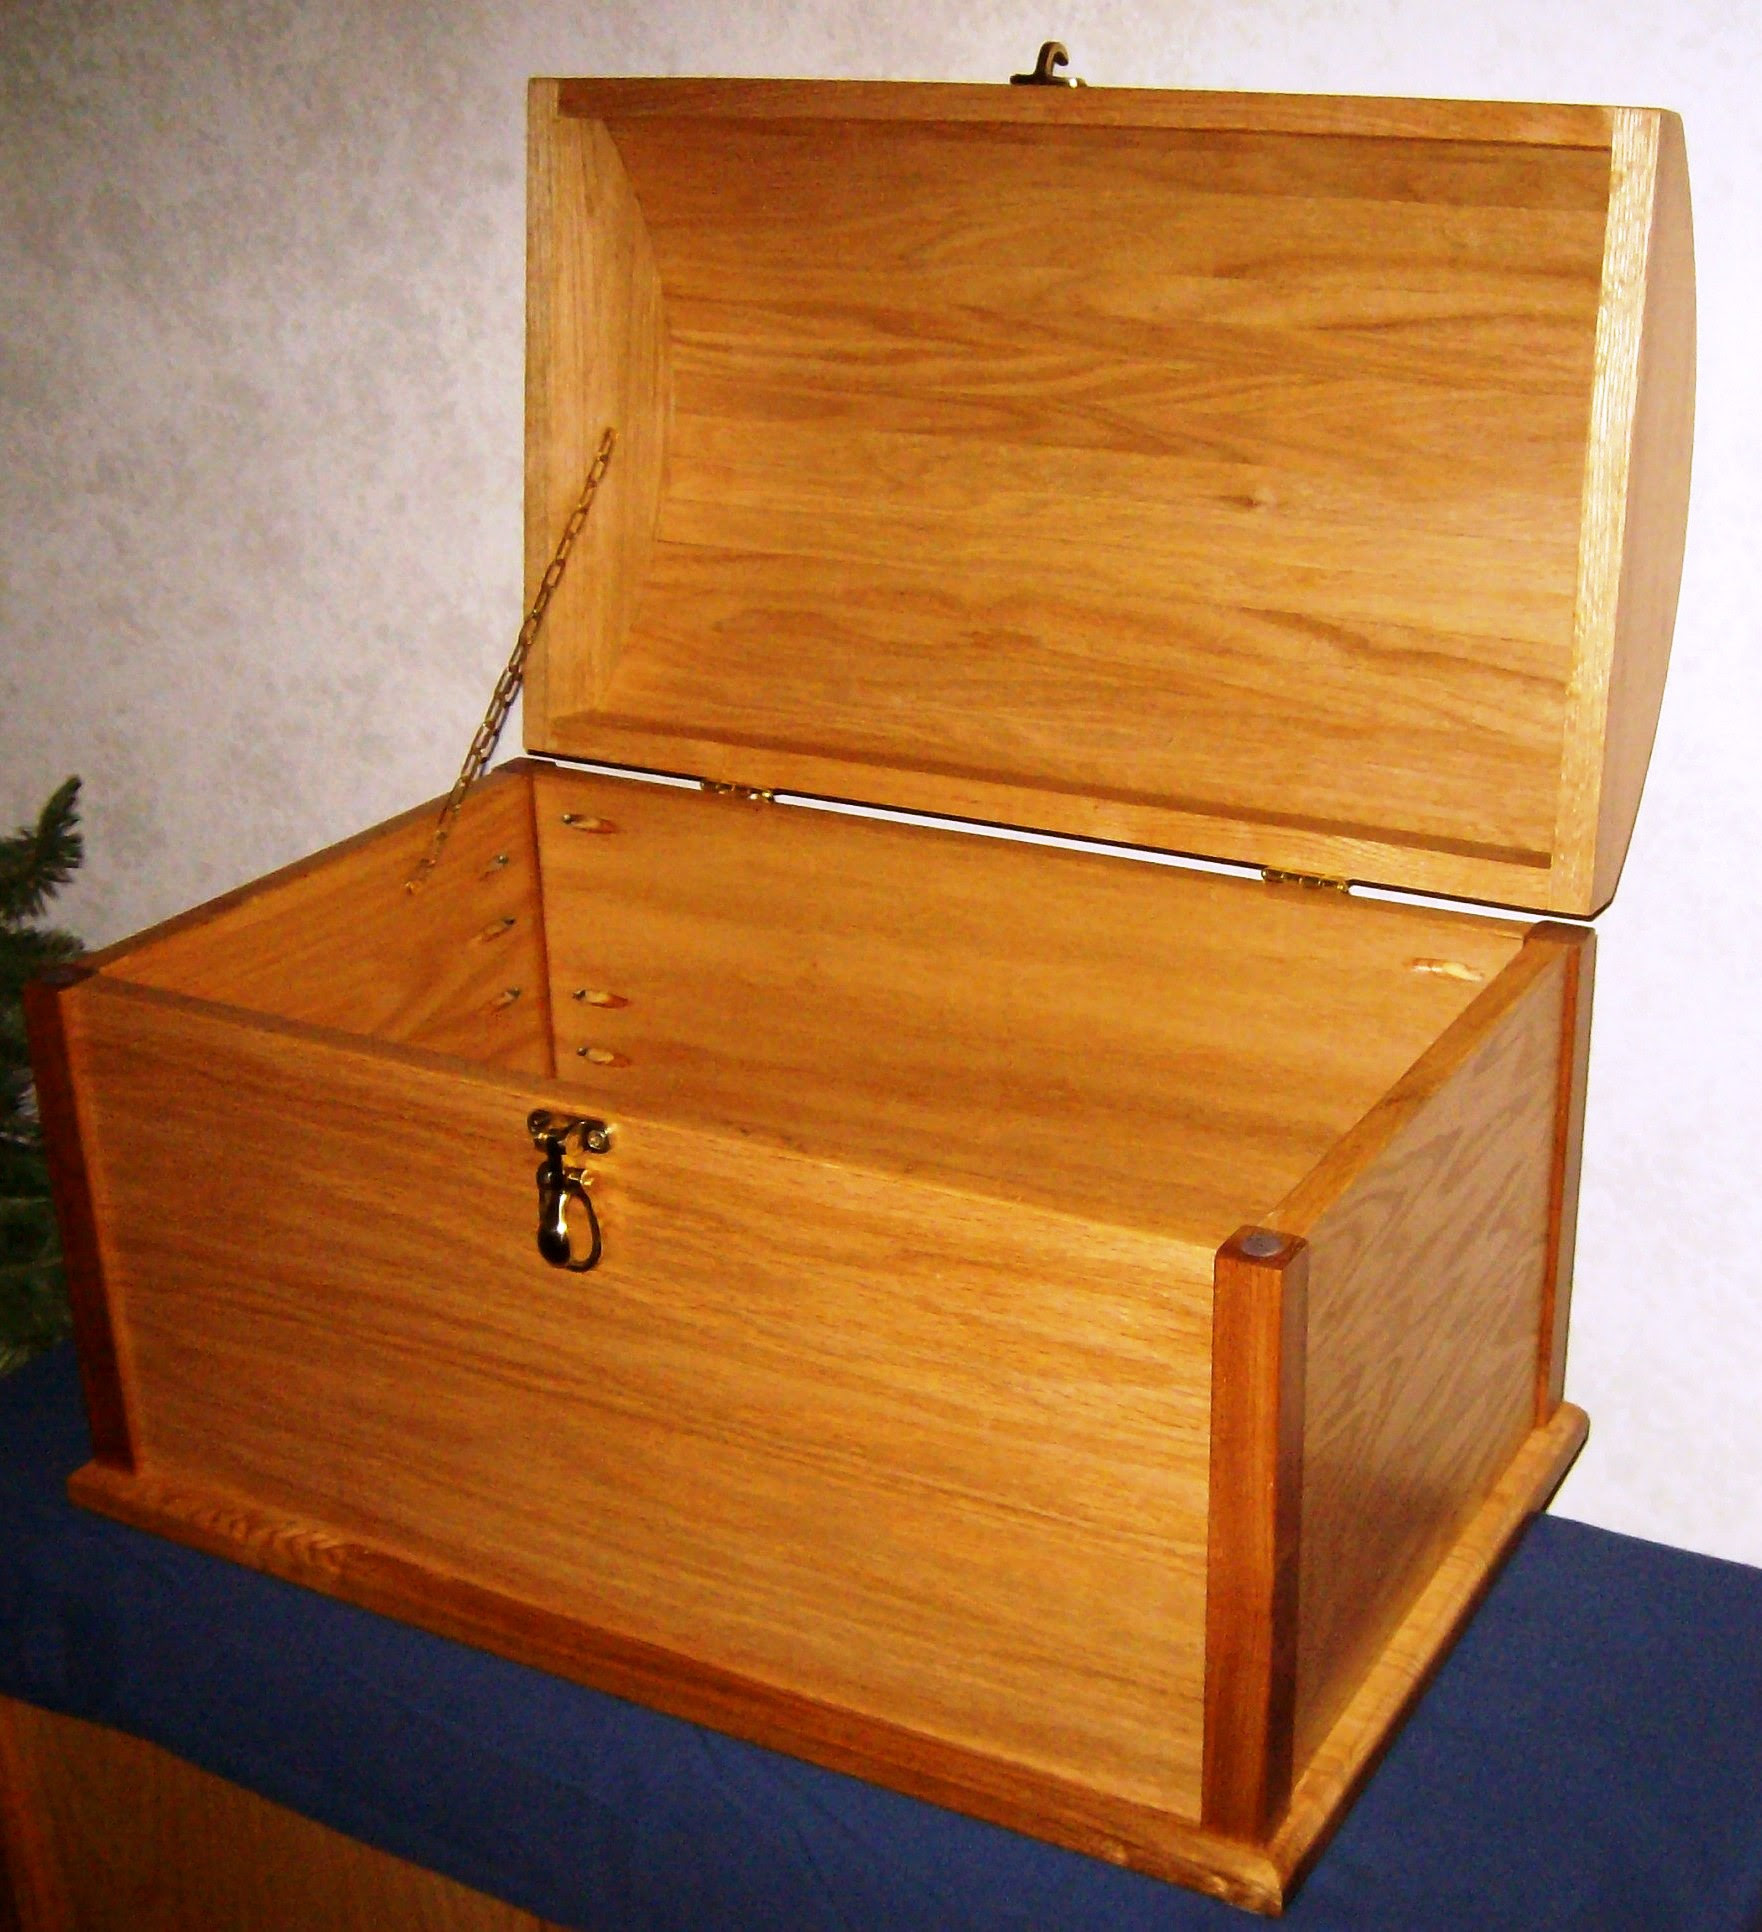 Woodworking Plan: free wooden octagon garbage box plans